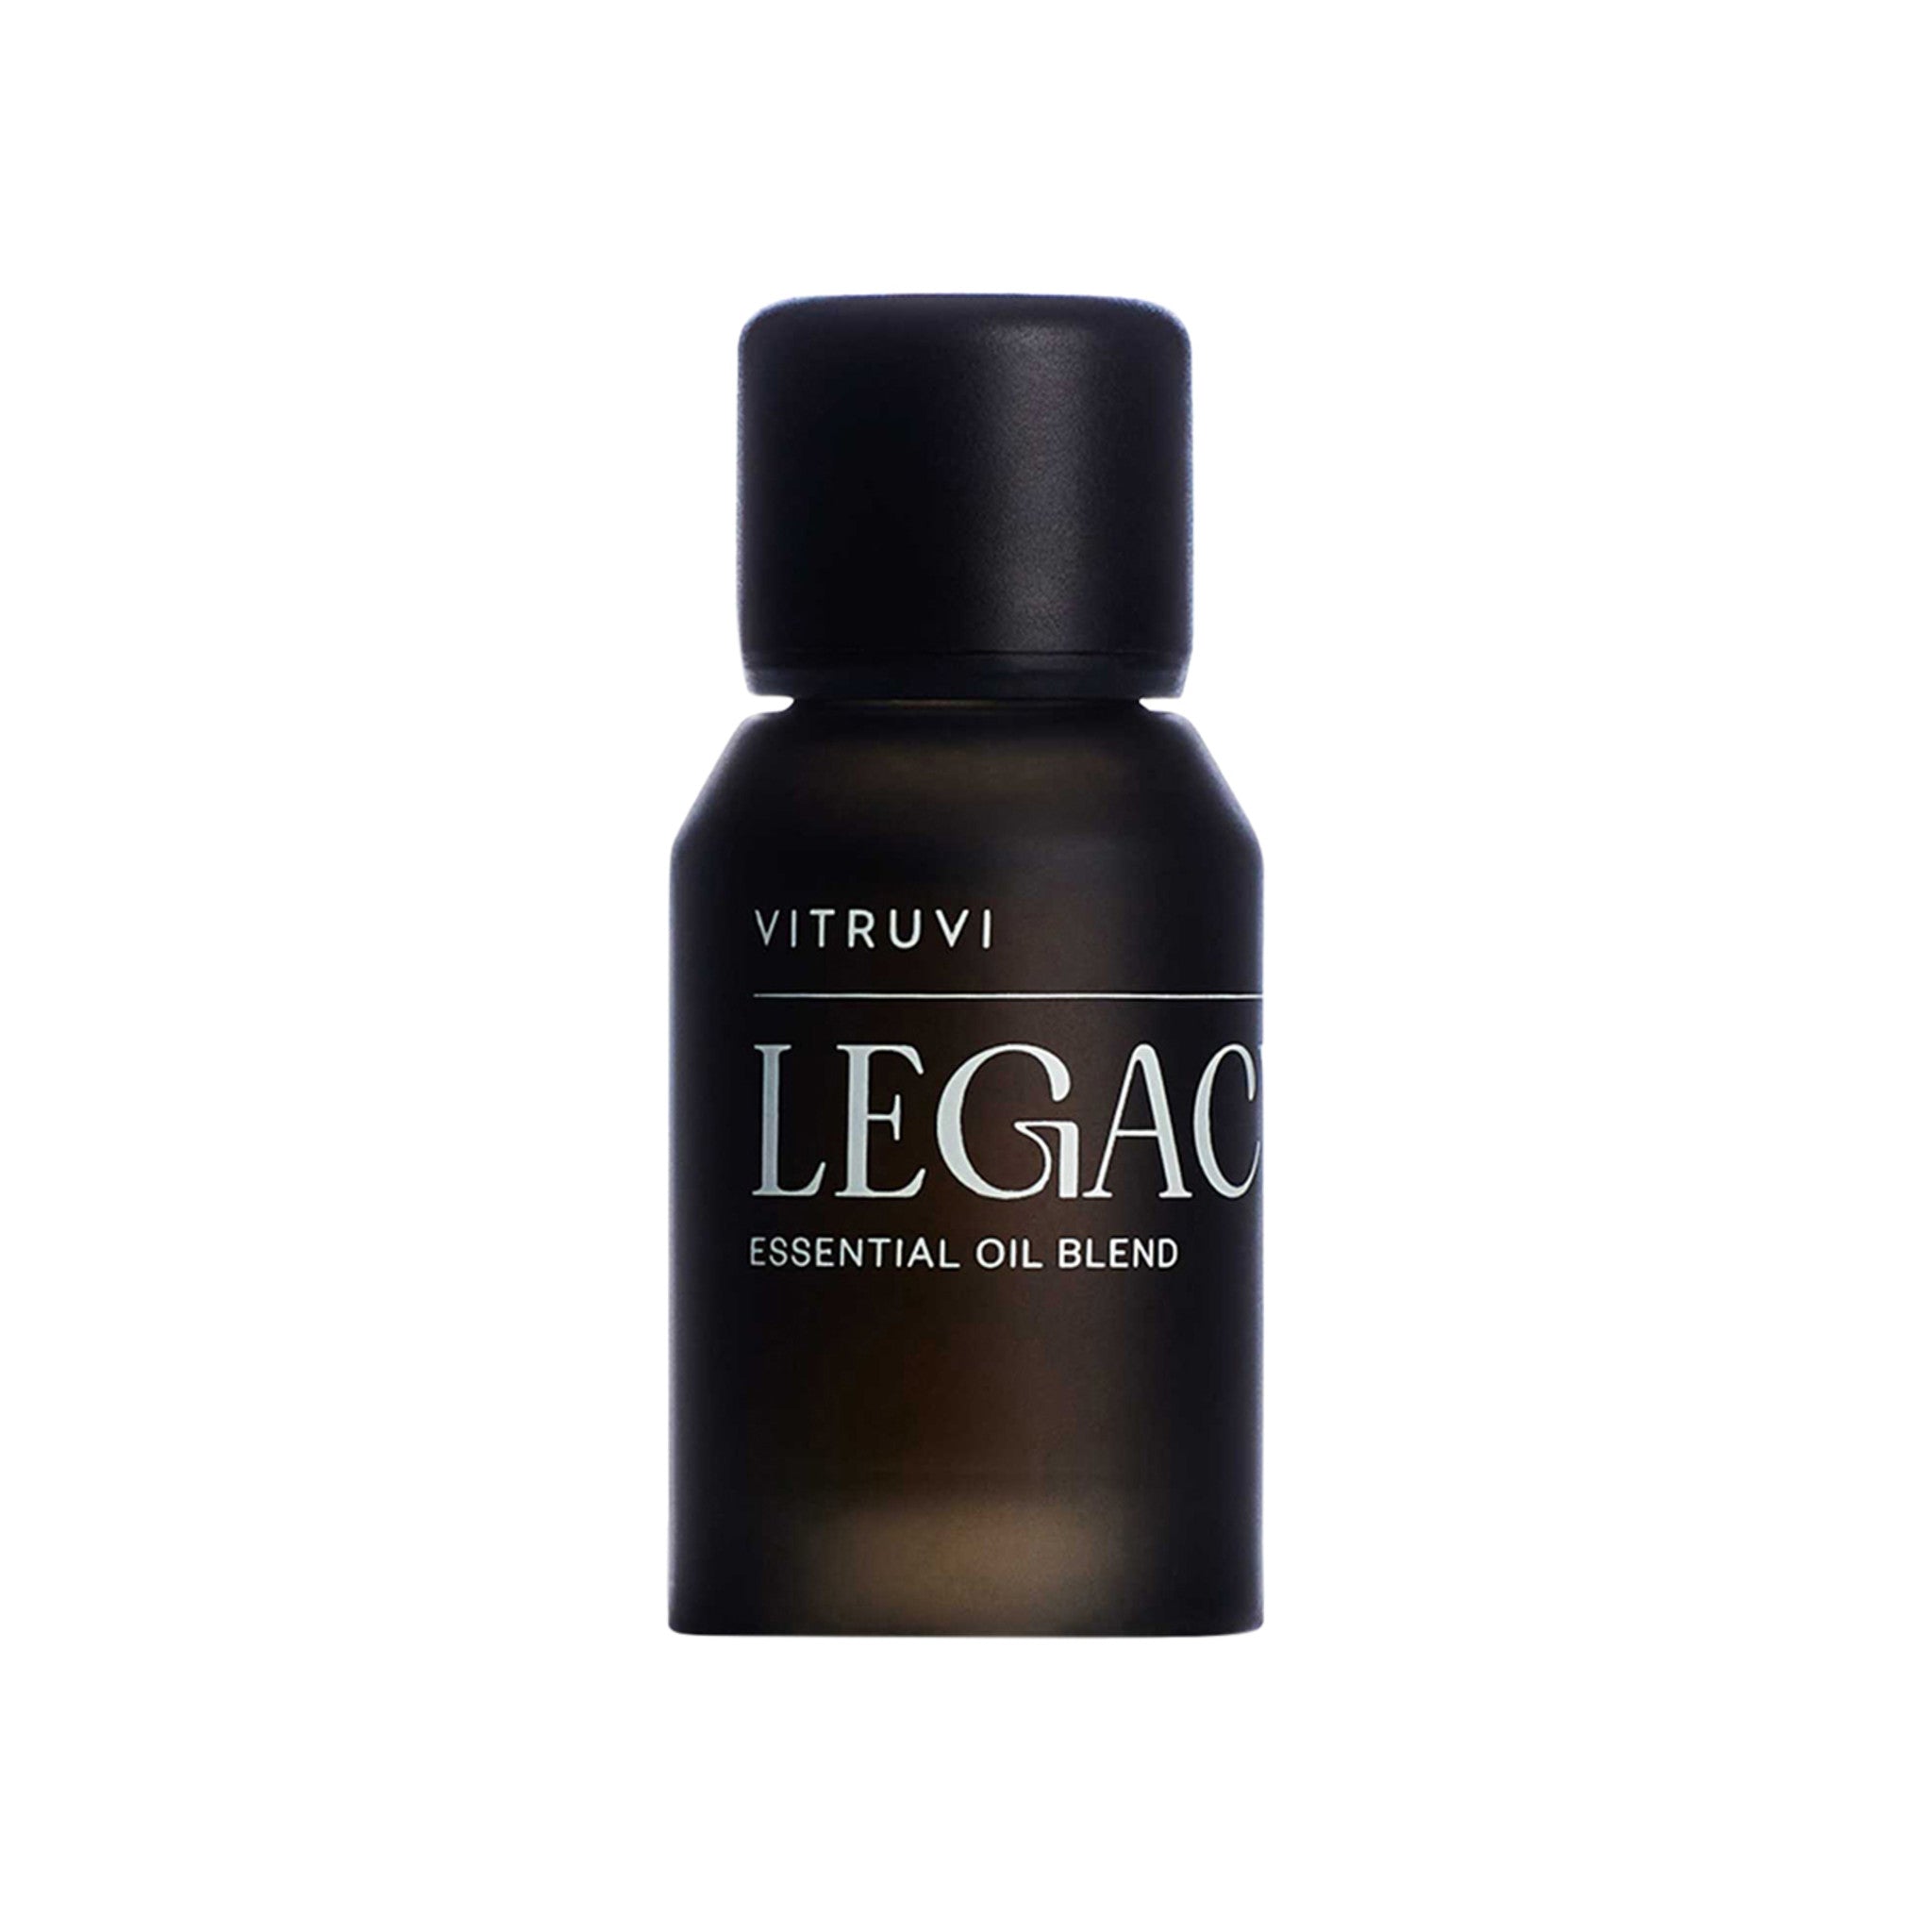 Vitruvi Legacy Essential Oil Blend main image.